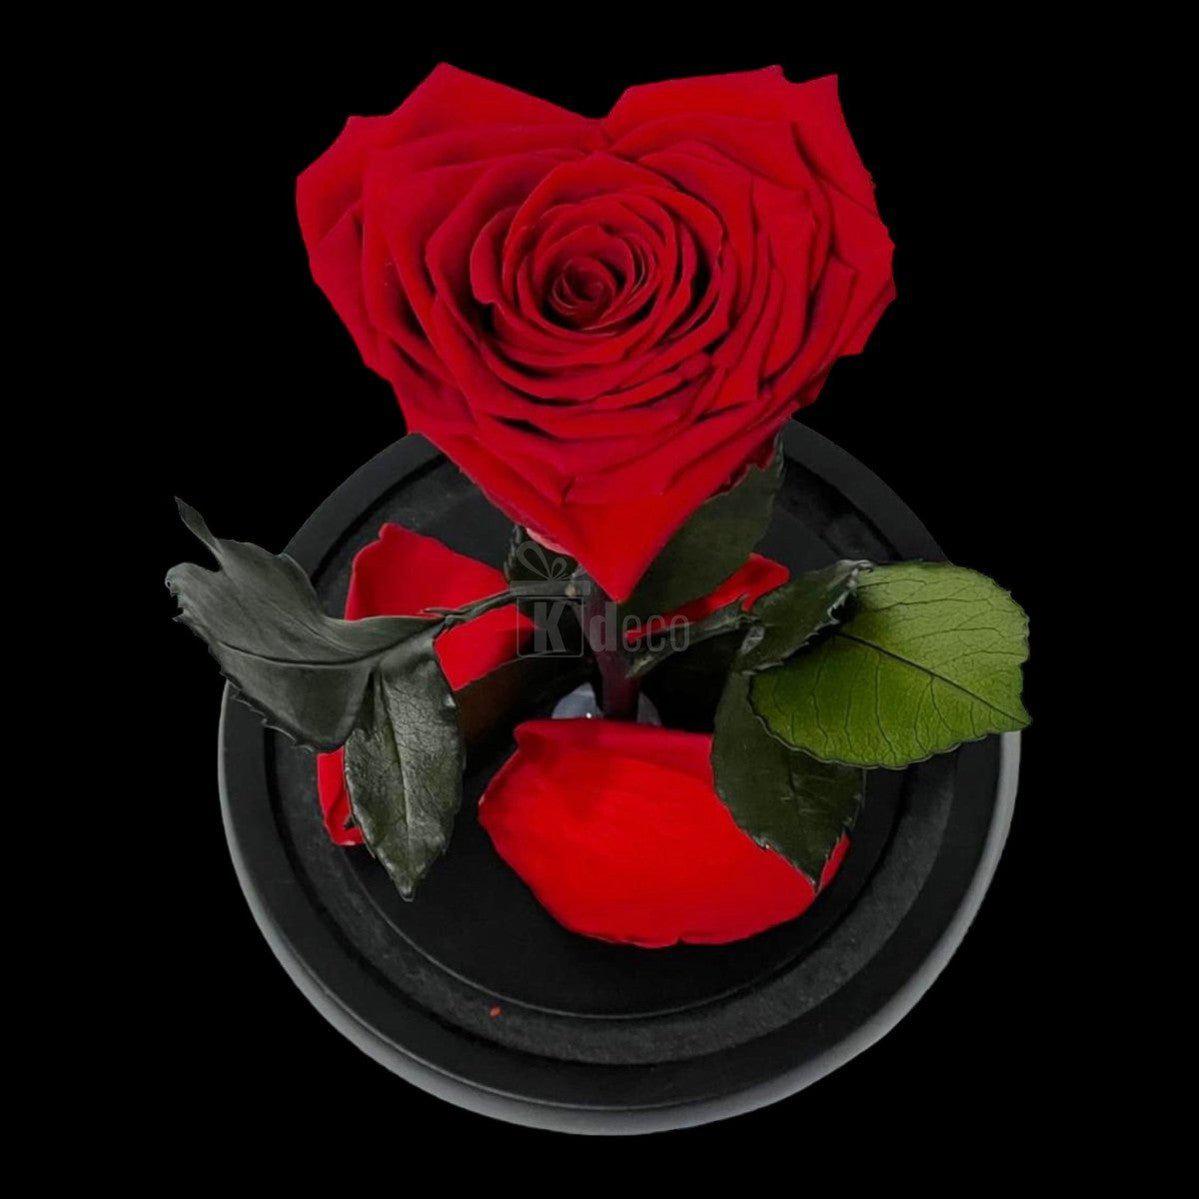 Trandafir Criogenat Rosu in Forma de Inima - Cupola de Sticla - Kdeco.ro